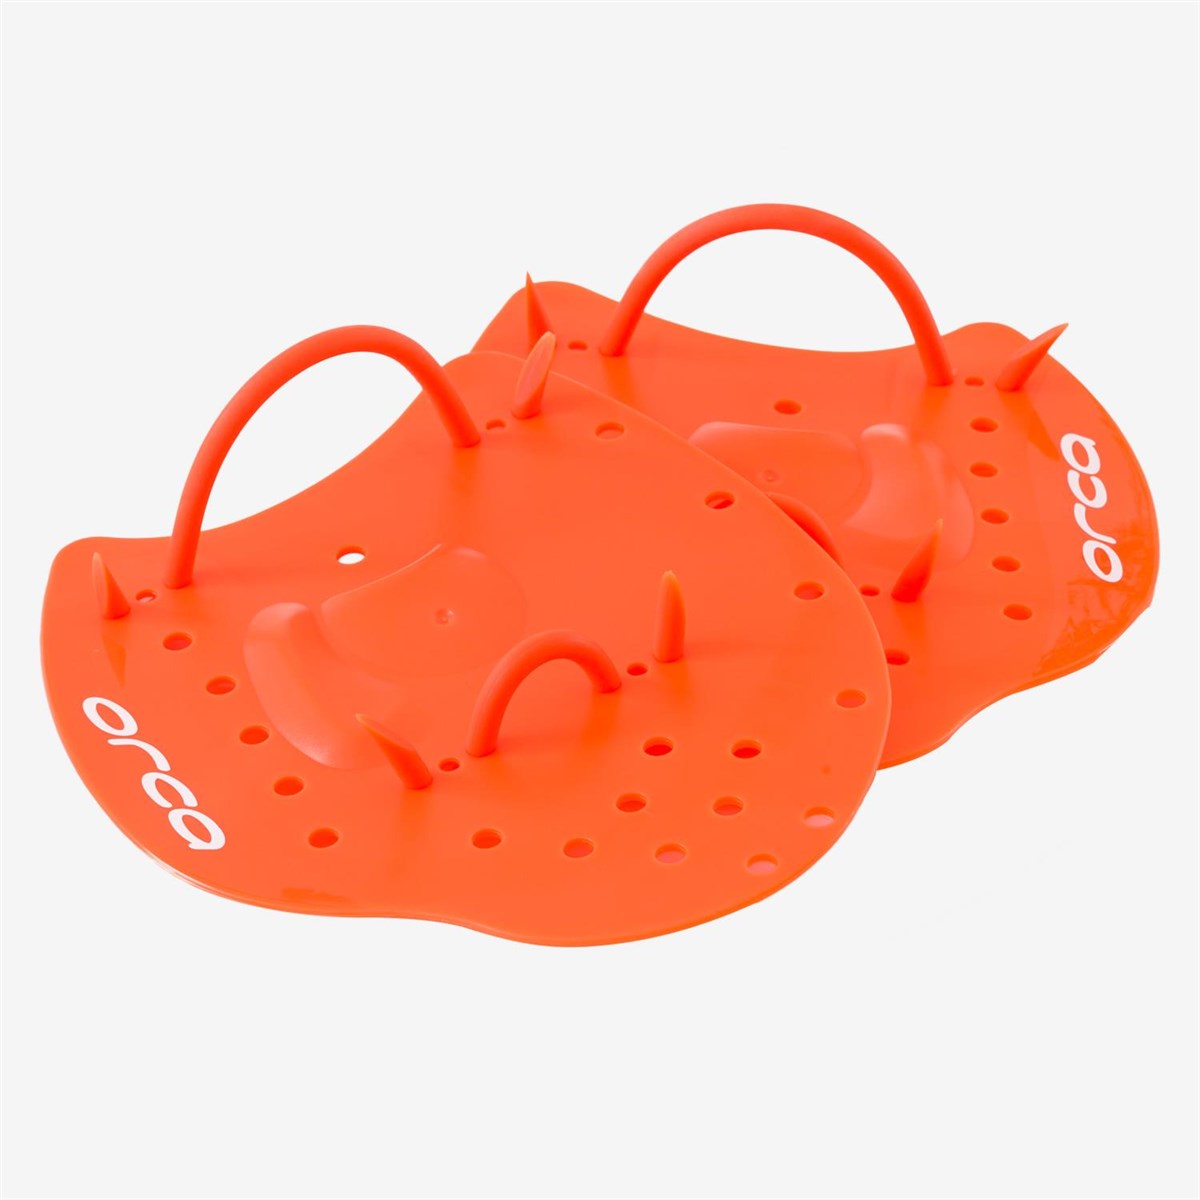 Orca Pro Paddles product image